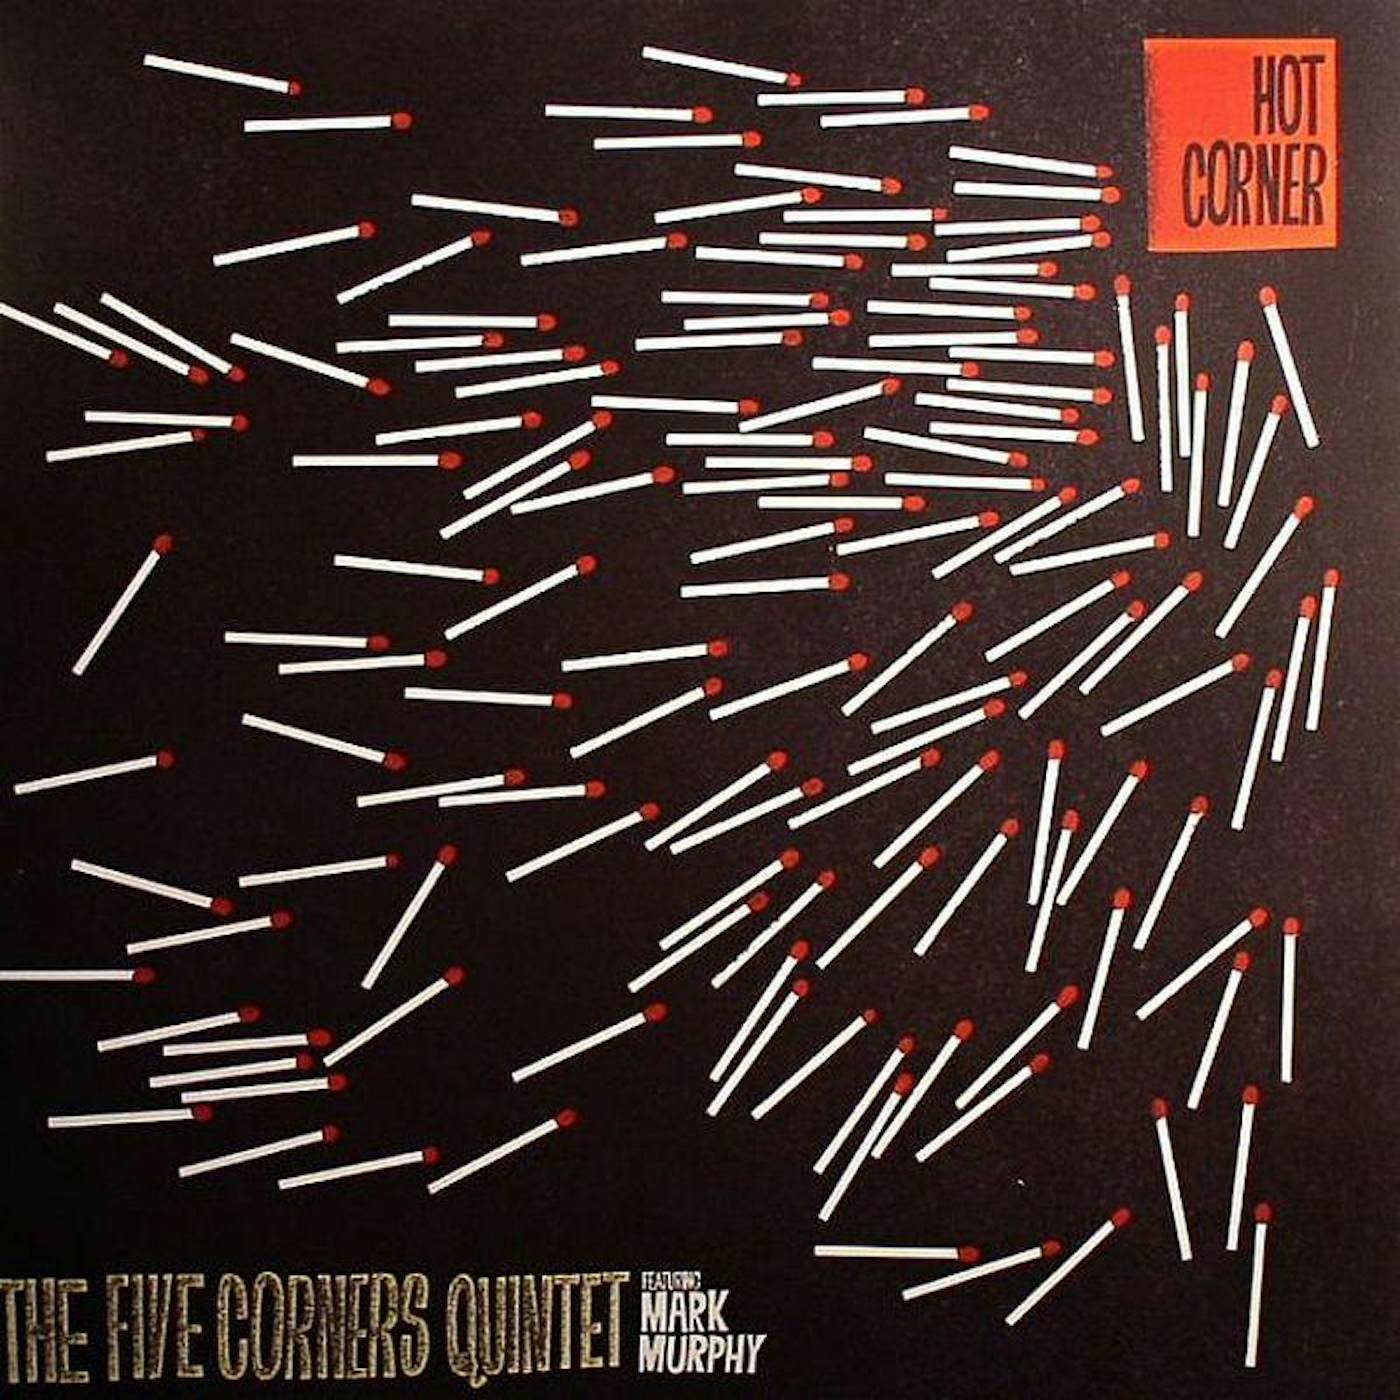 The Five Corners Quintet Hot Corner CD